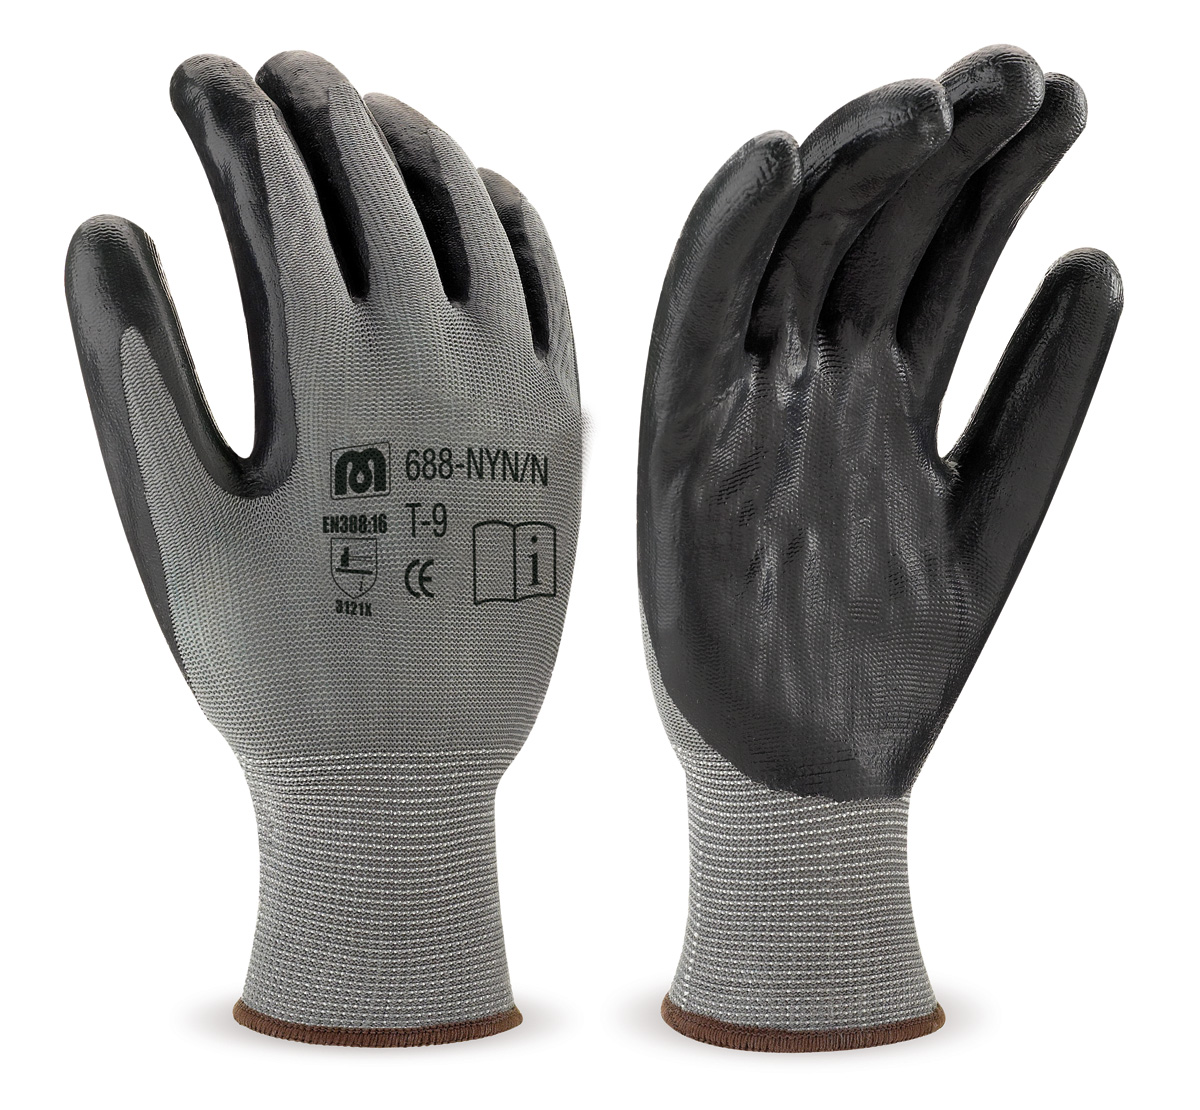 688-NYN/N Gants de Travail Nylon Gant polyester noir avec revêtement en nitrile coloris gris